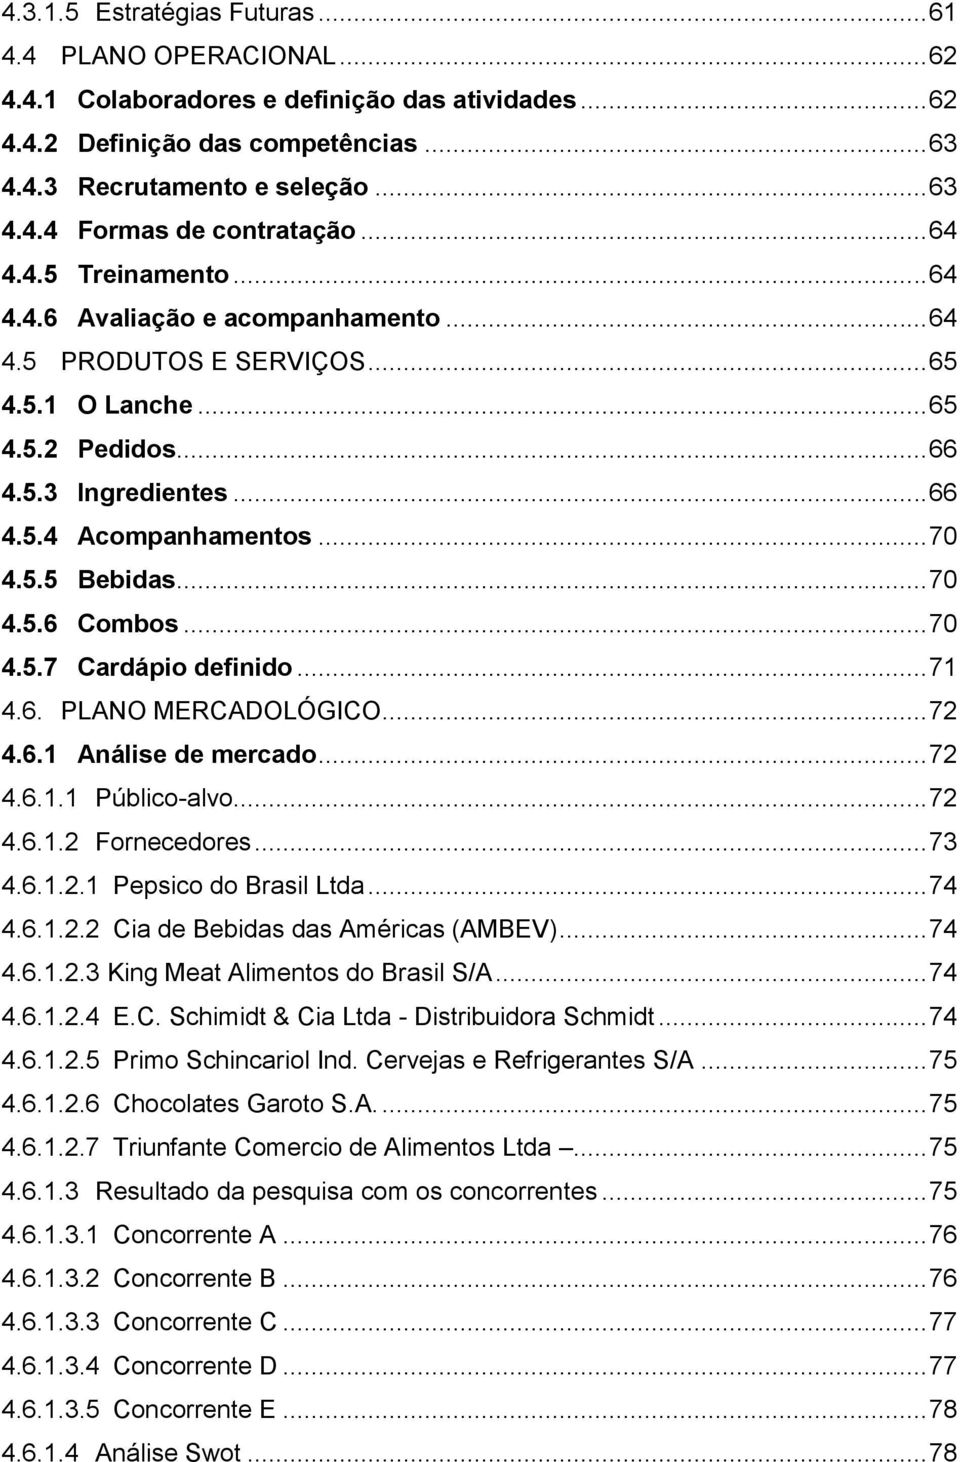 .. 70 4.5.6 Combos... 70 4.5.7 Cardápio definido... 71 4.6. PLANO MERCADOLÓGICO... 72 4.6.1 Análise de mercado... 72 4.6.1.1 Público-alvo... 72 4.6.1.2 Fornecedores... 73 4.6.1.2.1 Pepsico do Brasil Ltda.